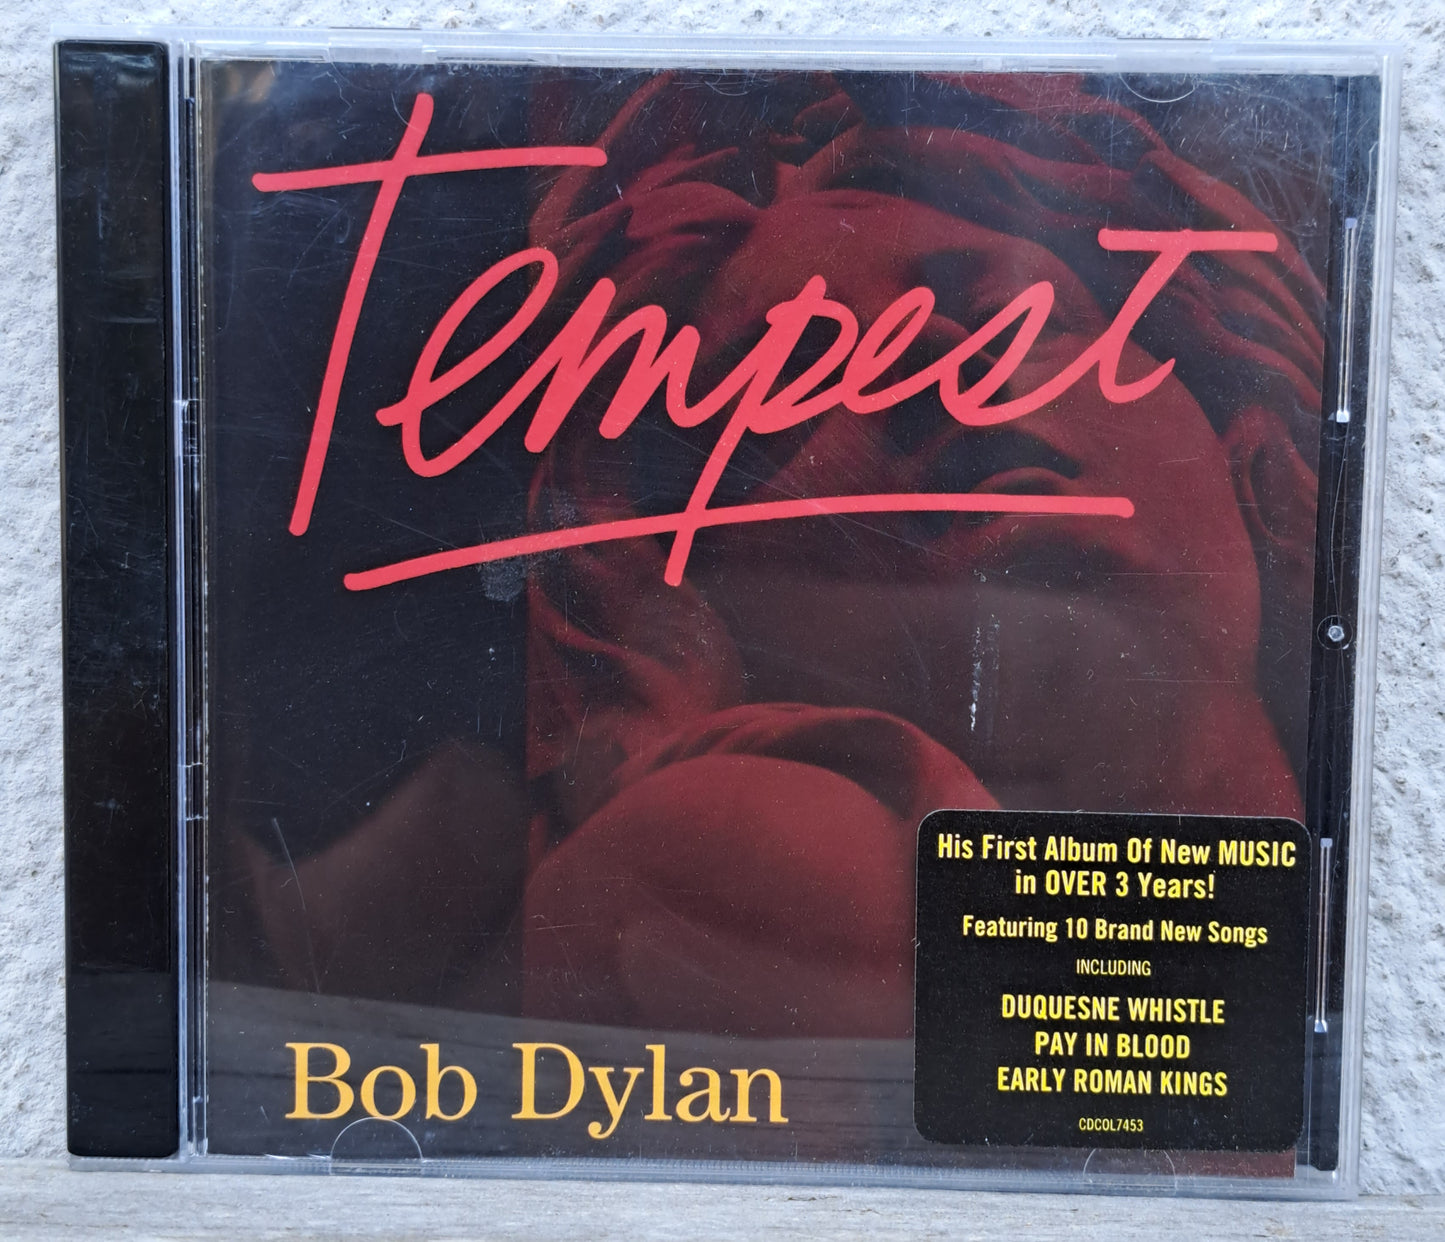 Bob Dylan - Tempest (cd)